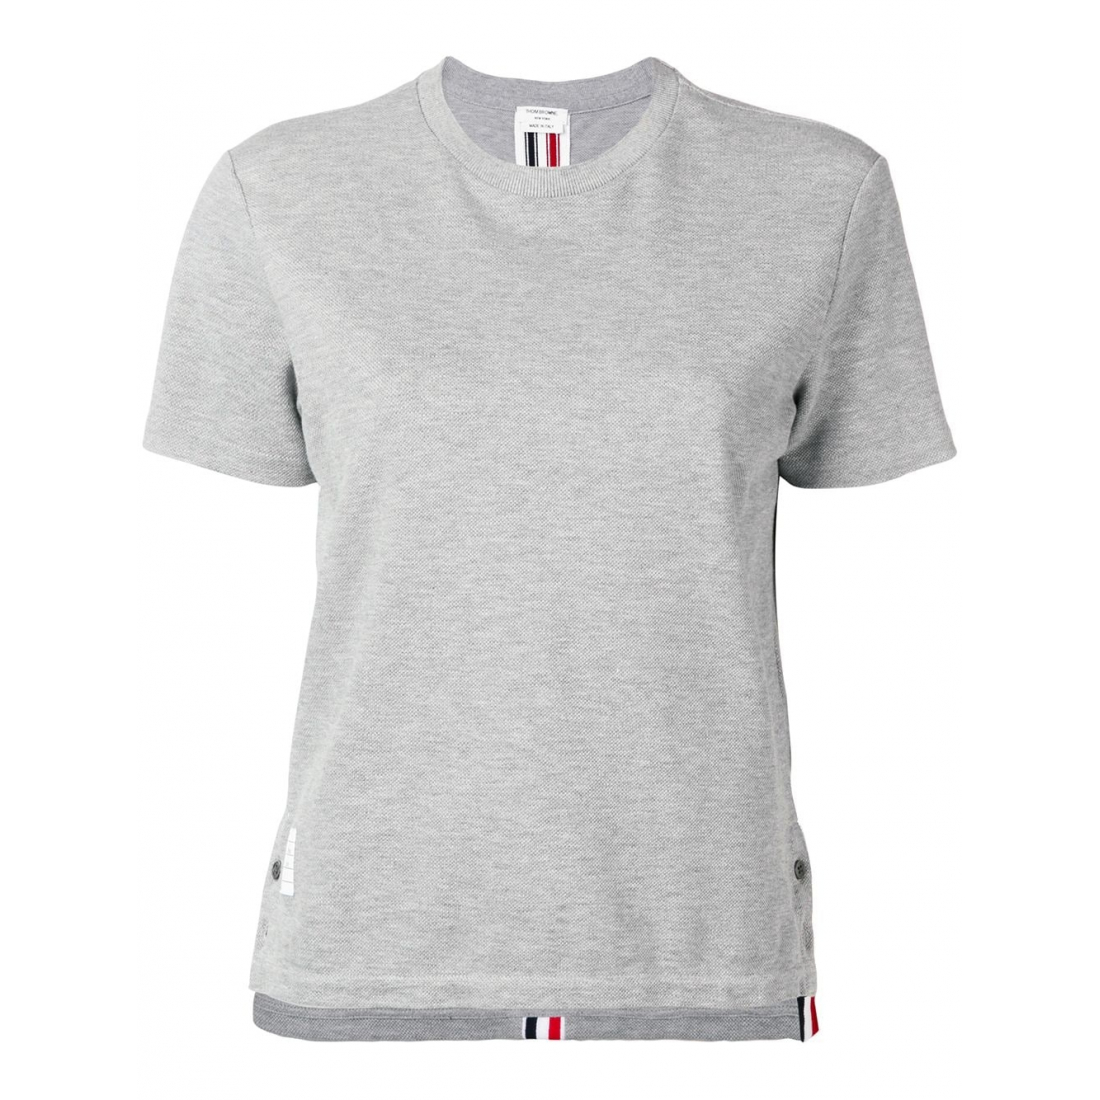 Women's 'Rwb Stripe' T-Shirt